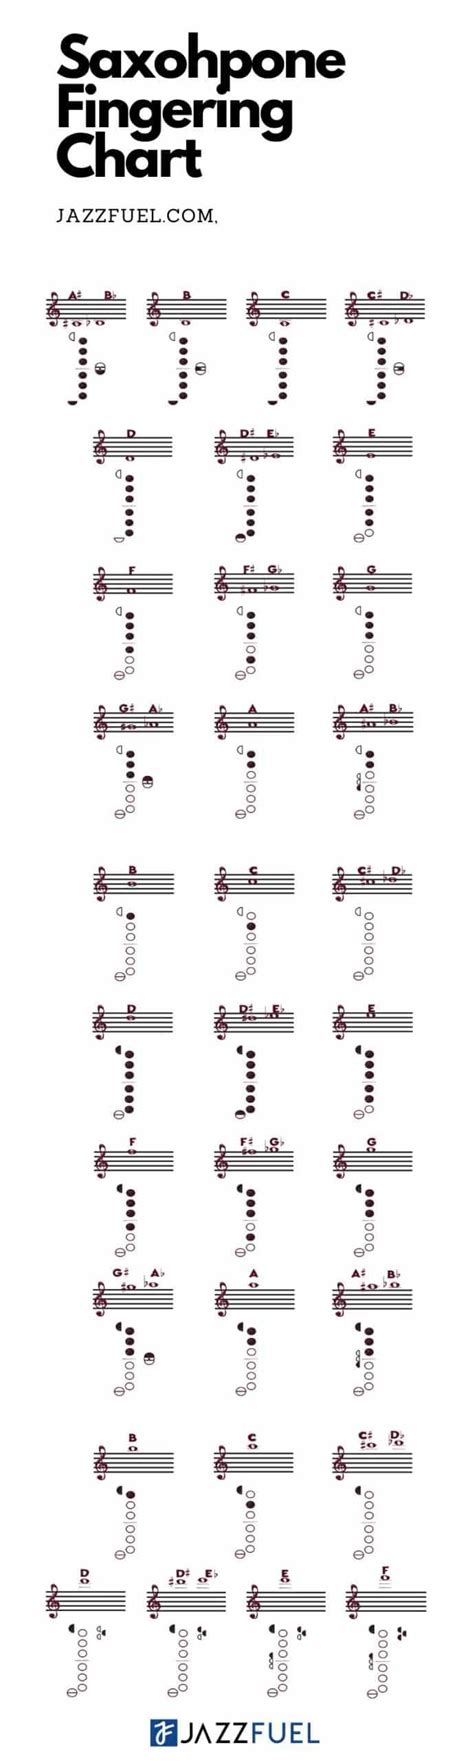 Saxophone Fingering Chart Free Download